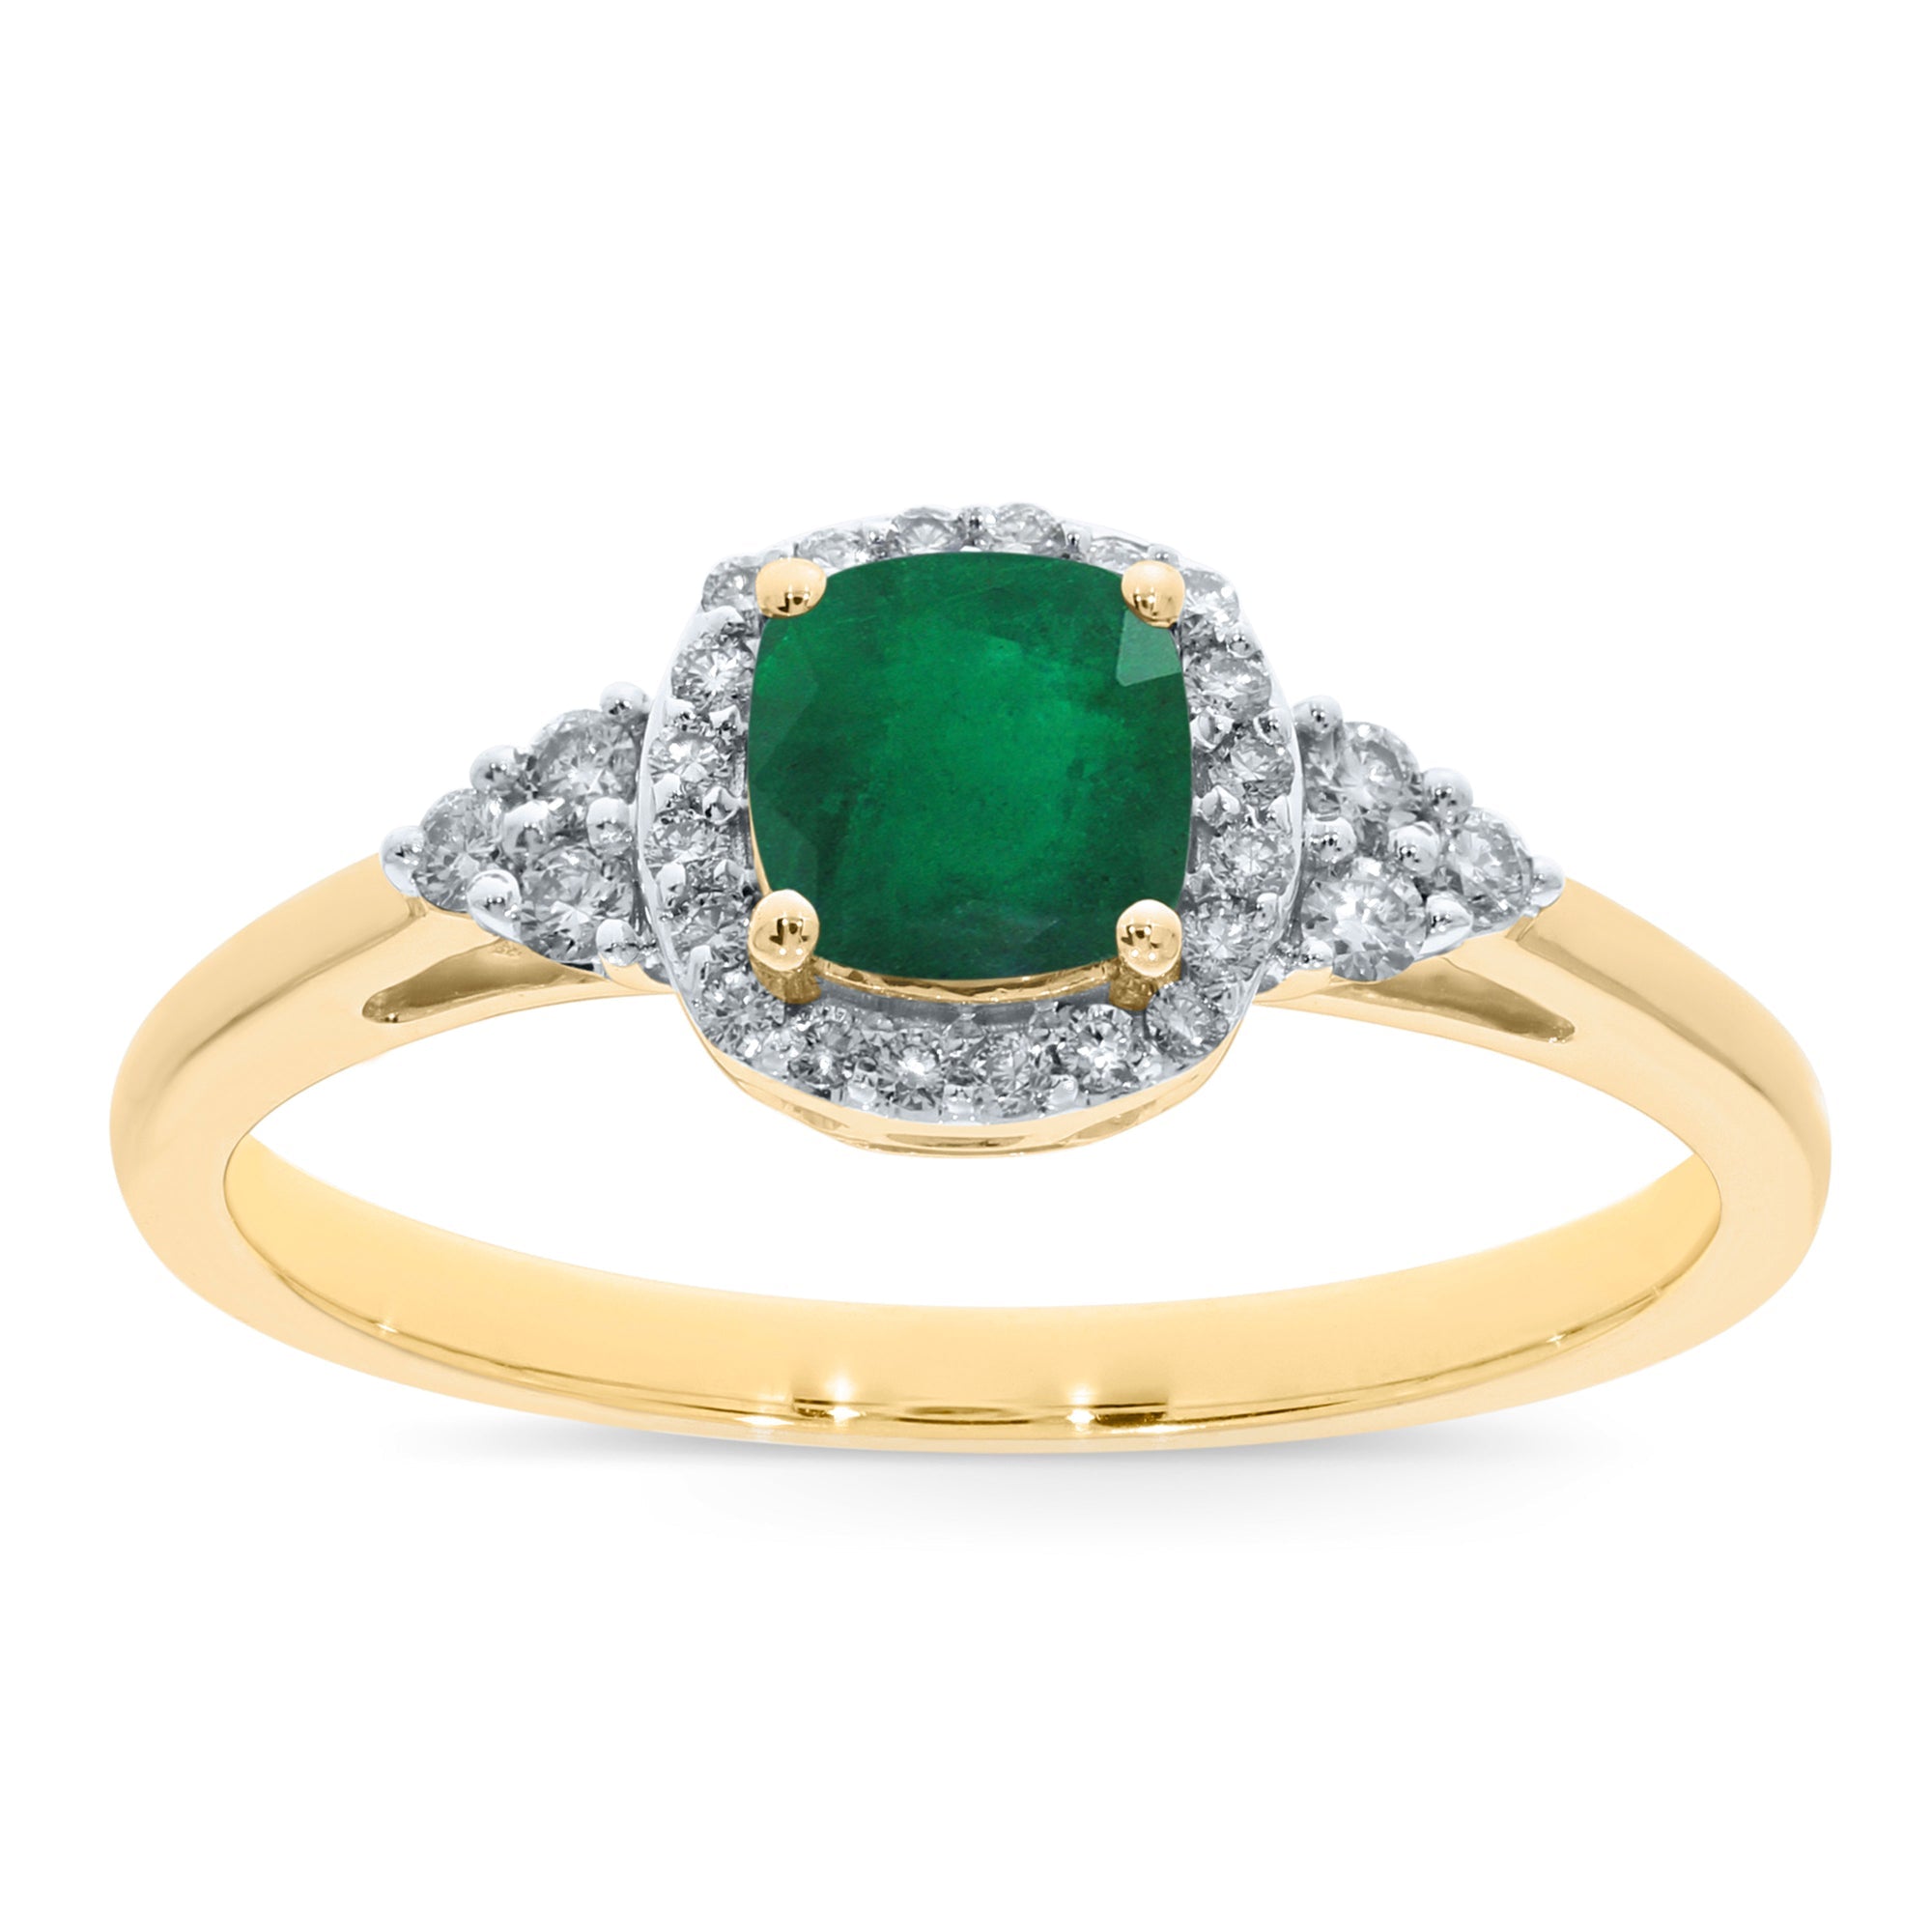 9ct gold 5mm cushion shape emerald & diamond ring 0.15ct